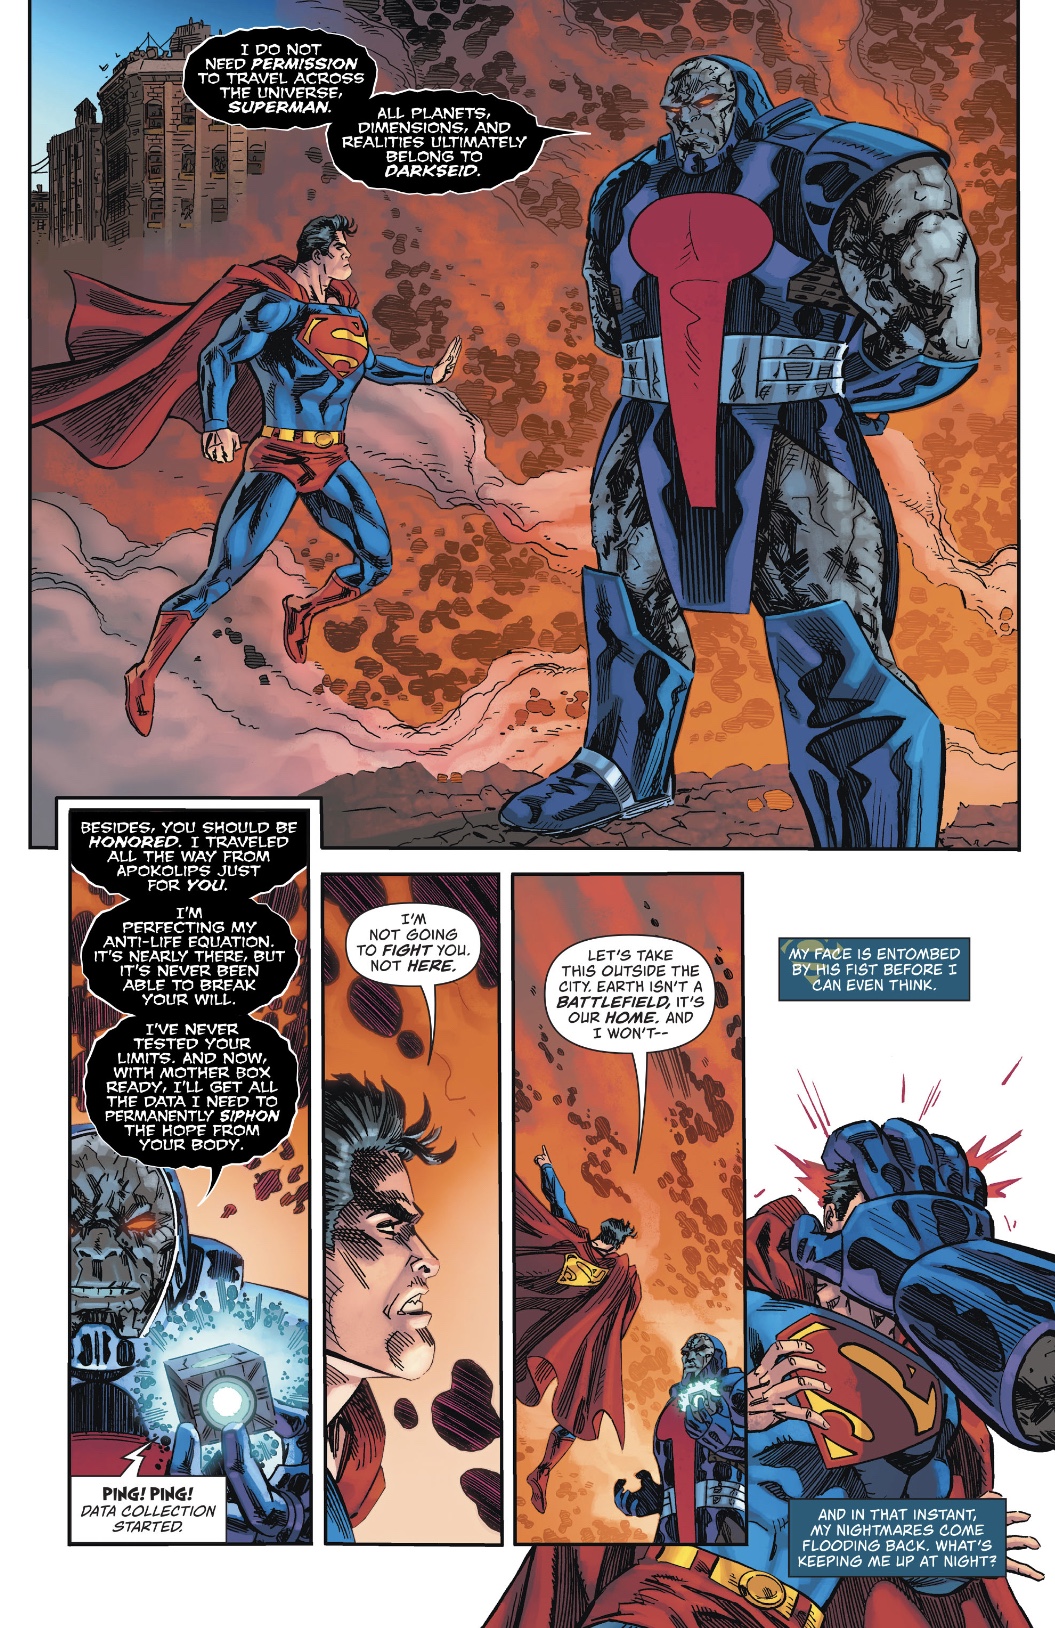 DC Comics Presents 13 33 49 Superman Shazam Black Adam Black Lightning  CHOOSE